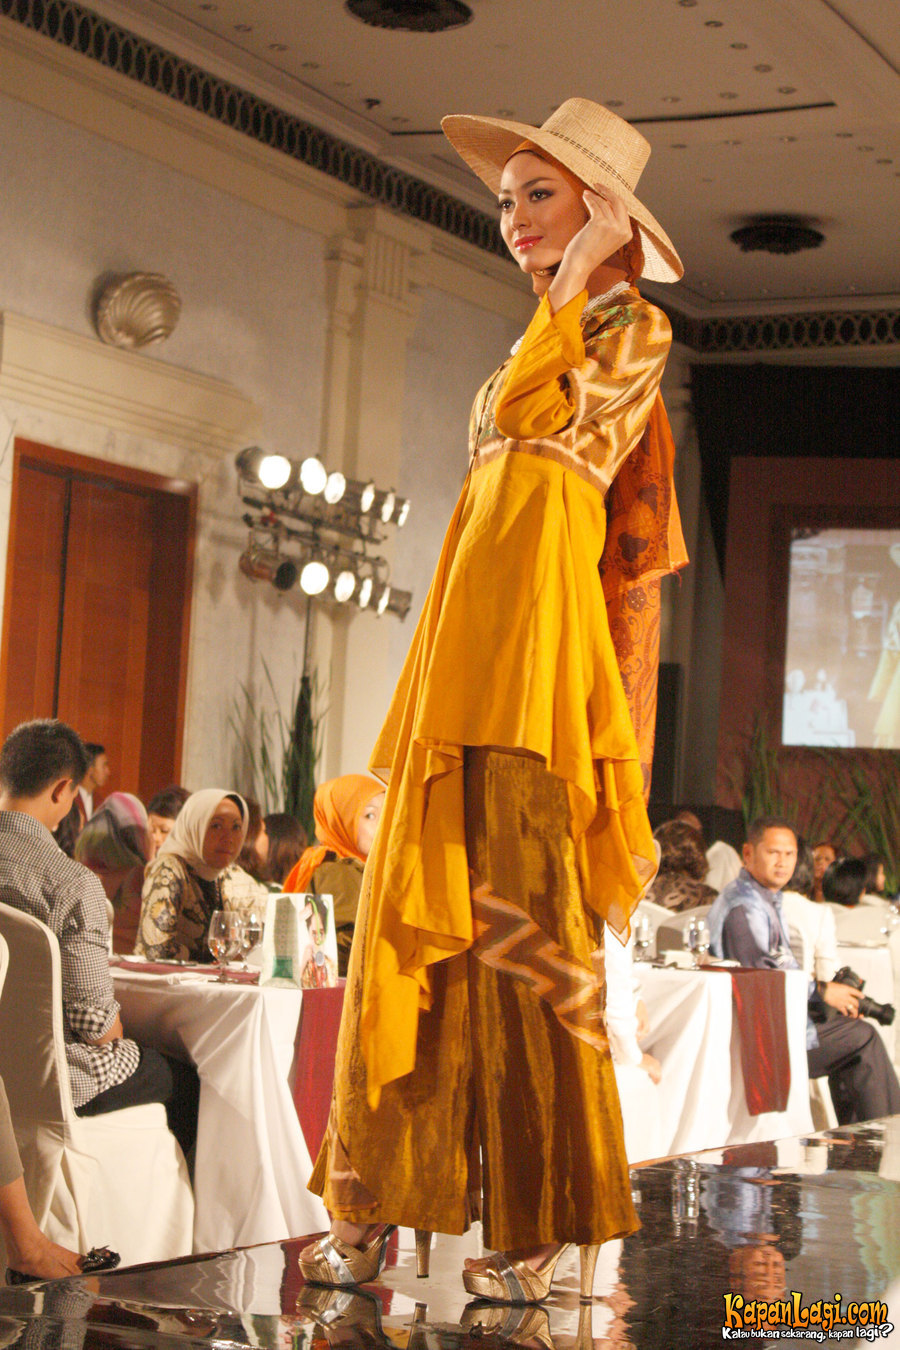 Inspirasi Baju Muslim dari Berbagai Negara  Tutorial Hijab